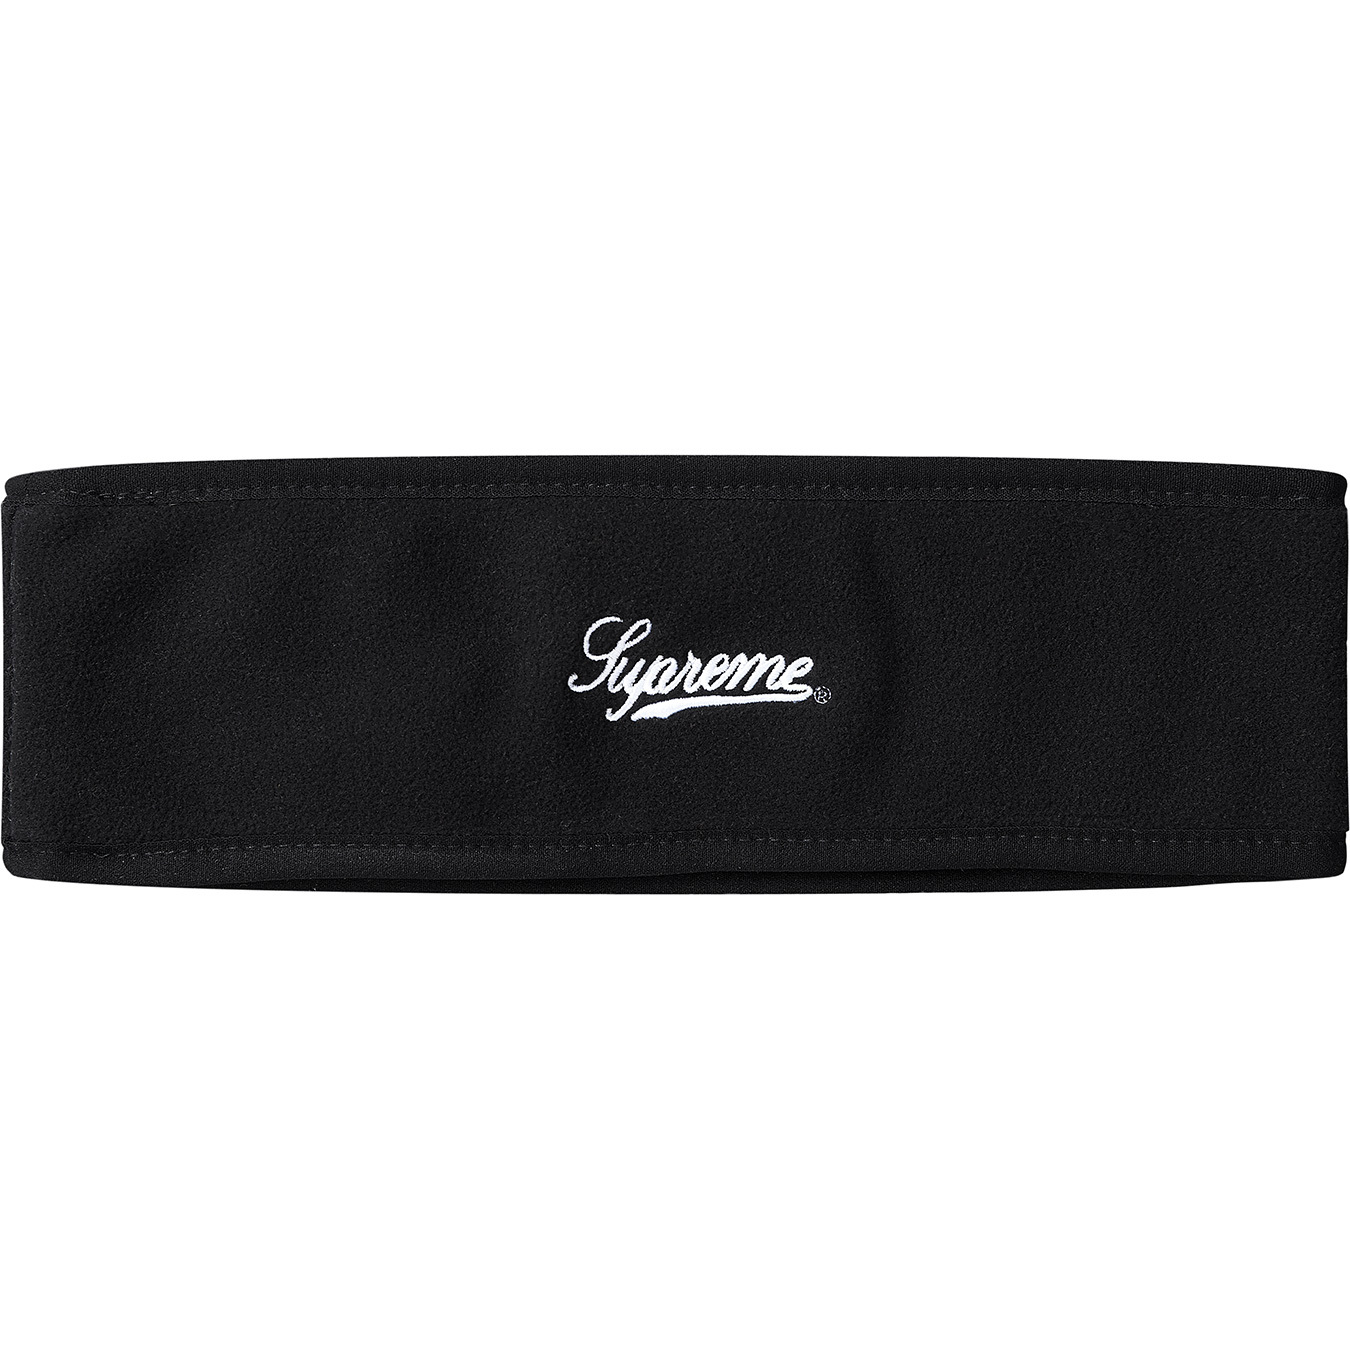 Supreme Polartec Logo Headband Black - FW17 - US